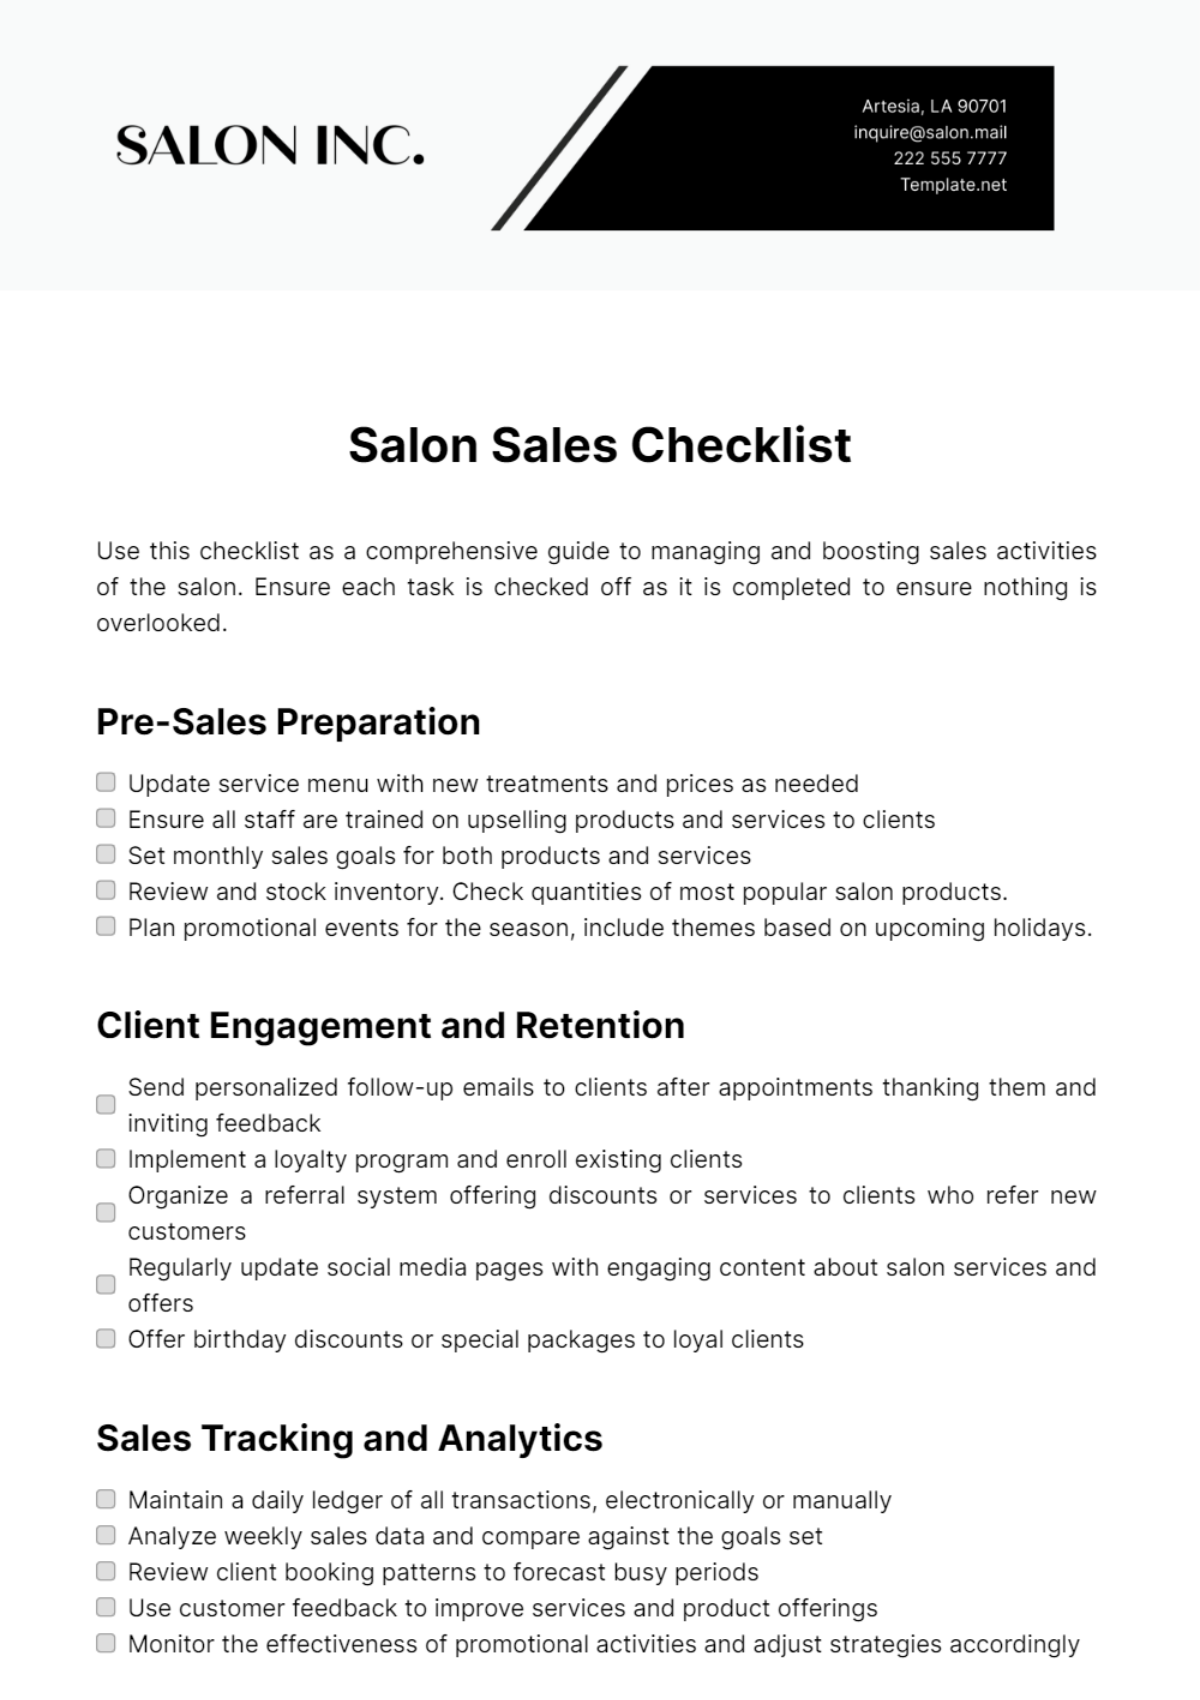 Salon Sales Checklist Template